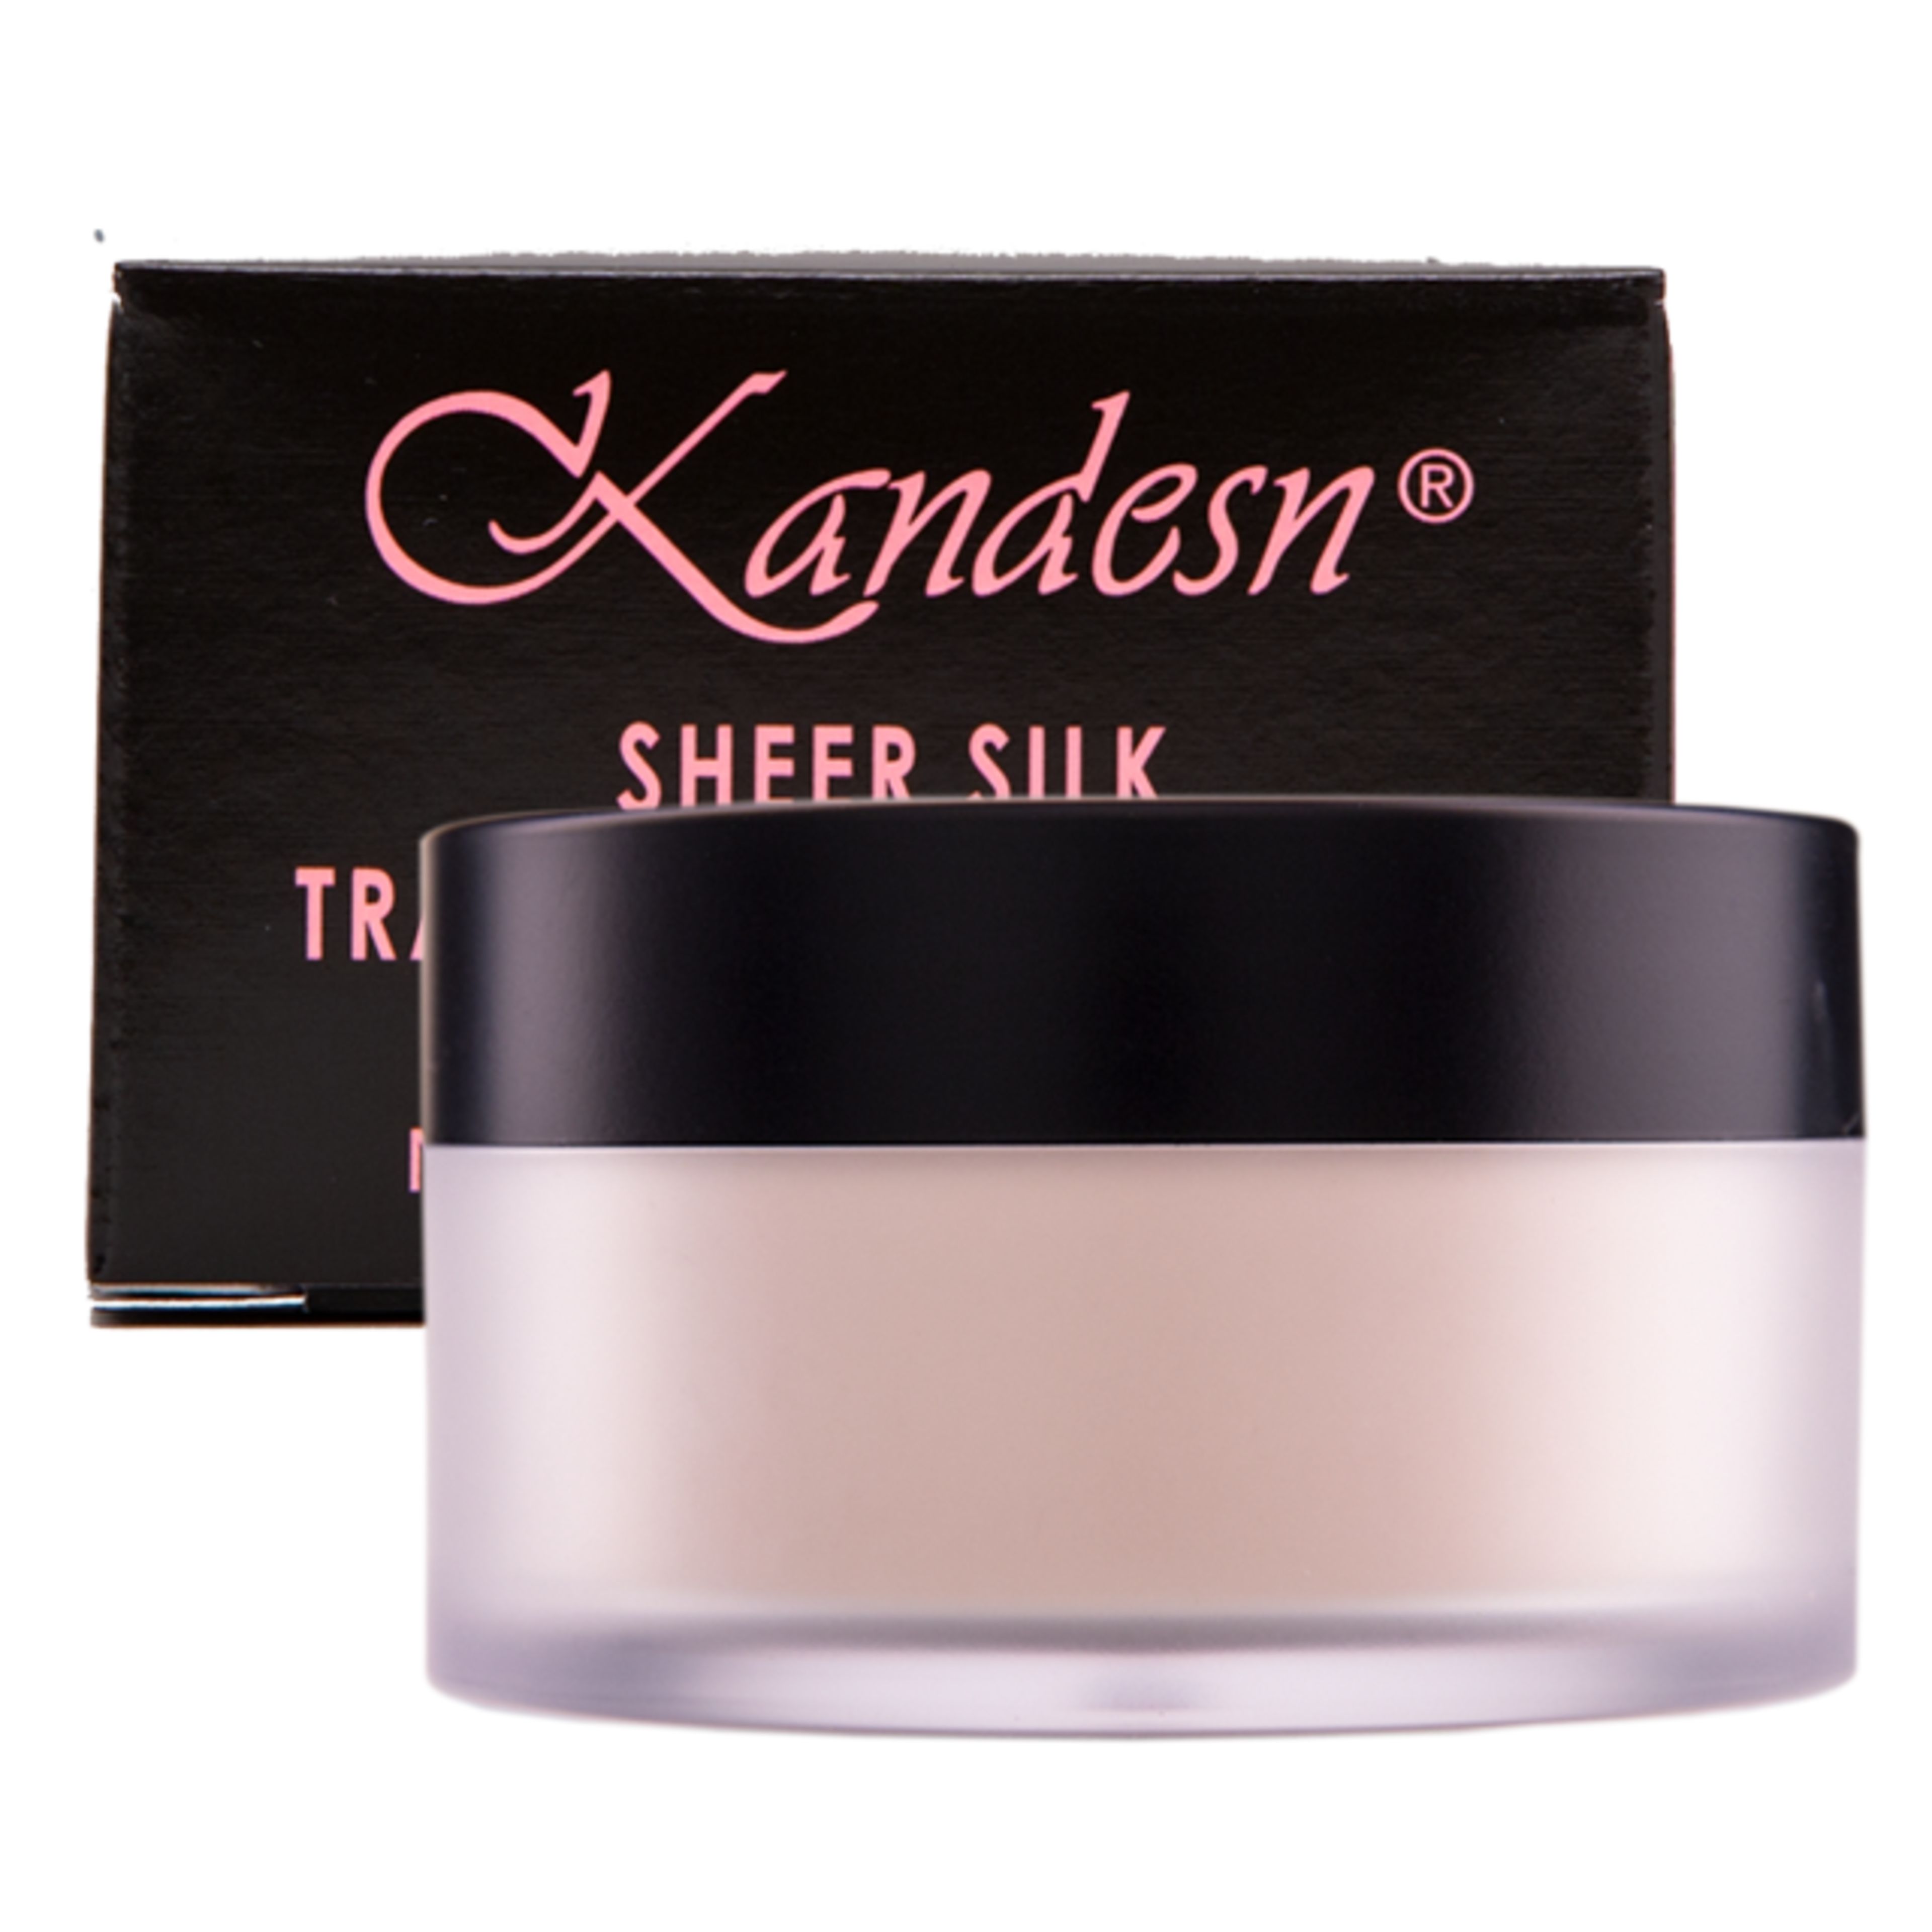 Kandesn® Sheer Silk Translucent Powder